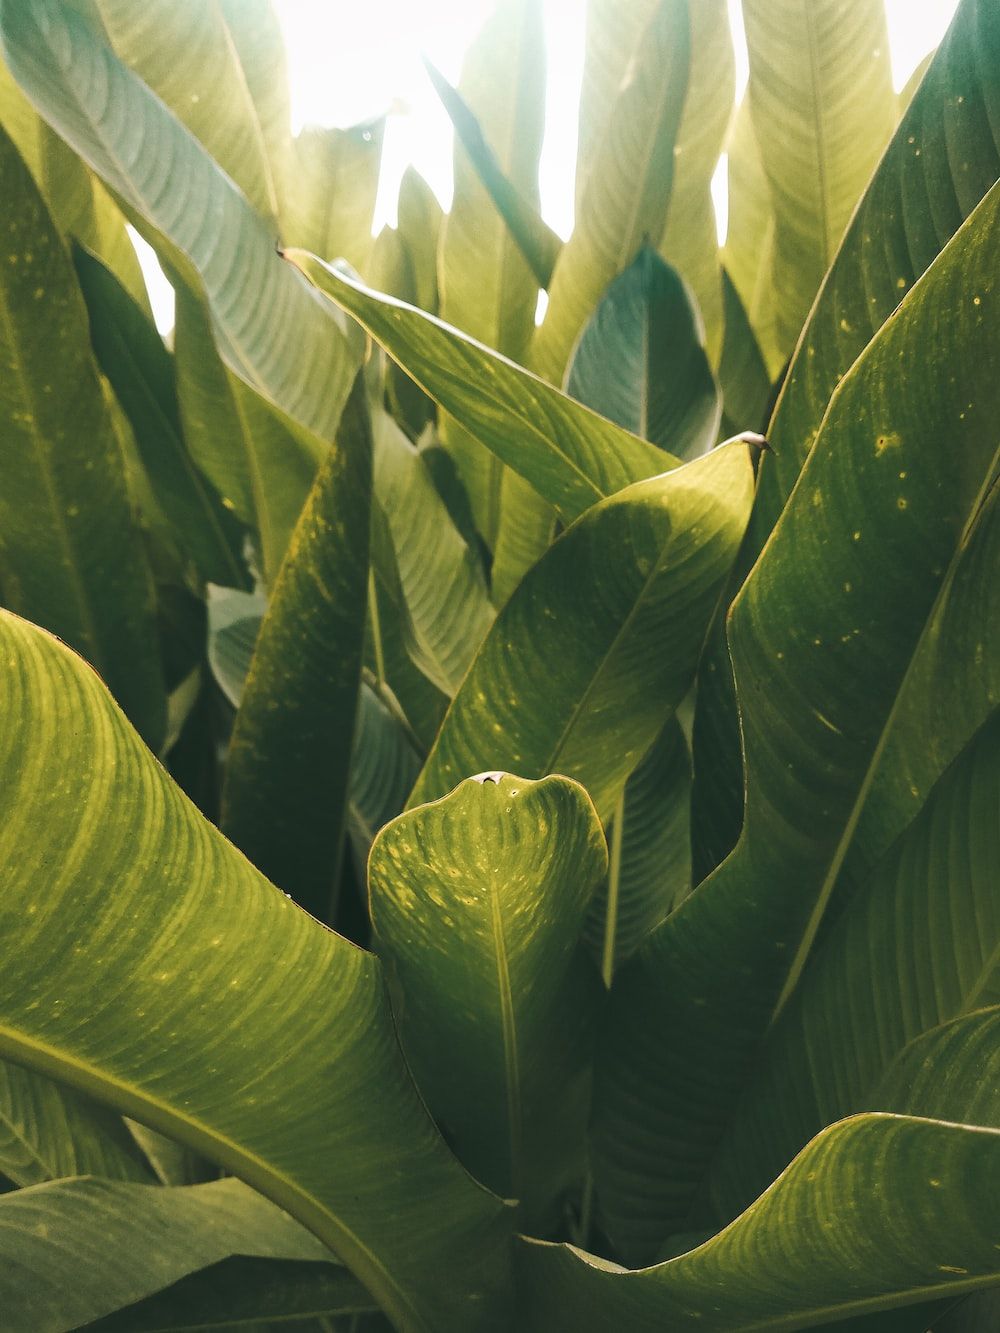 Green banana leaves during daytime photo